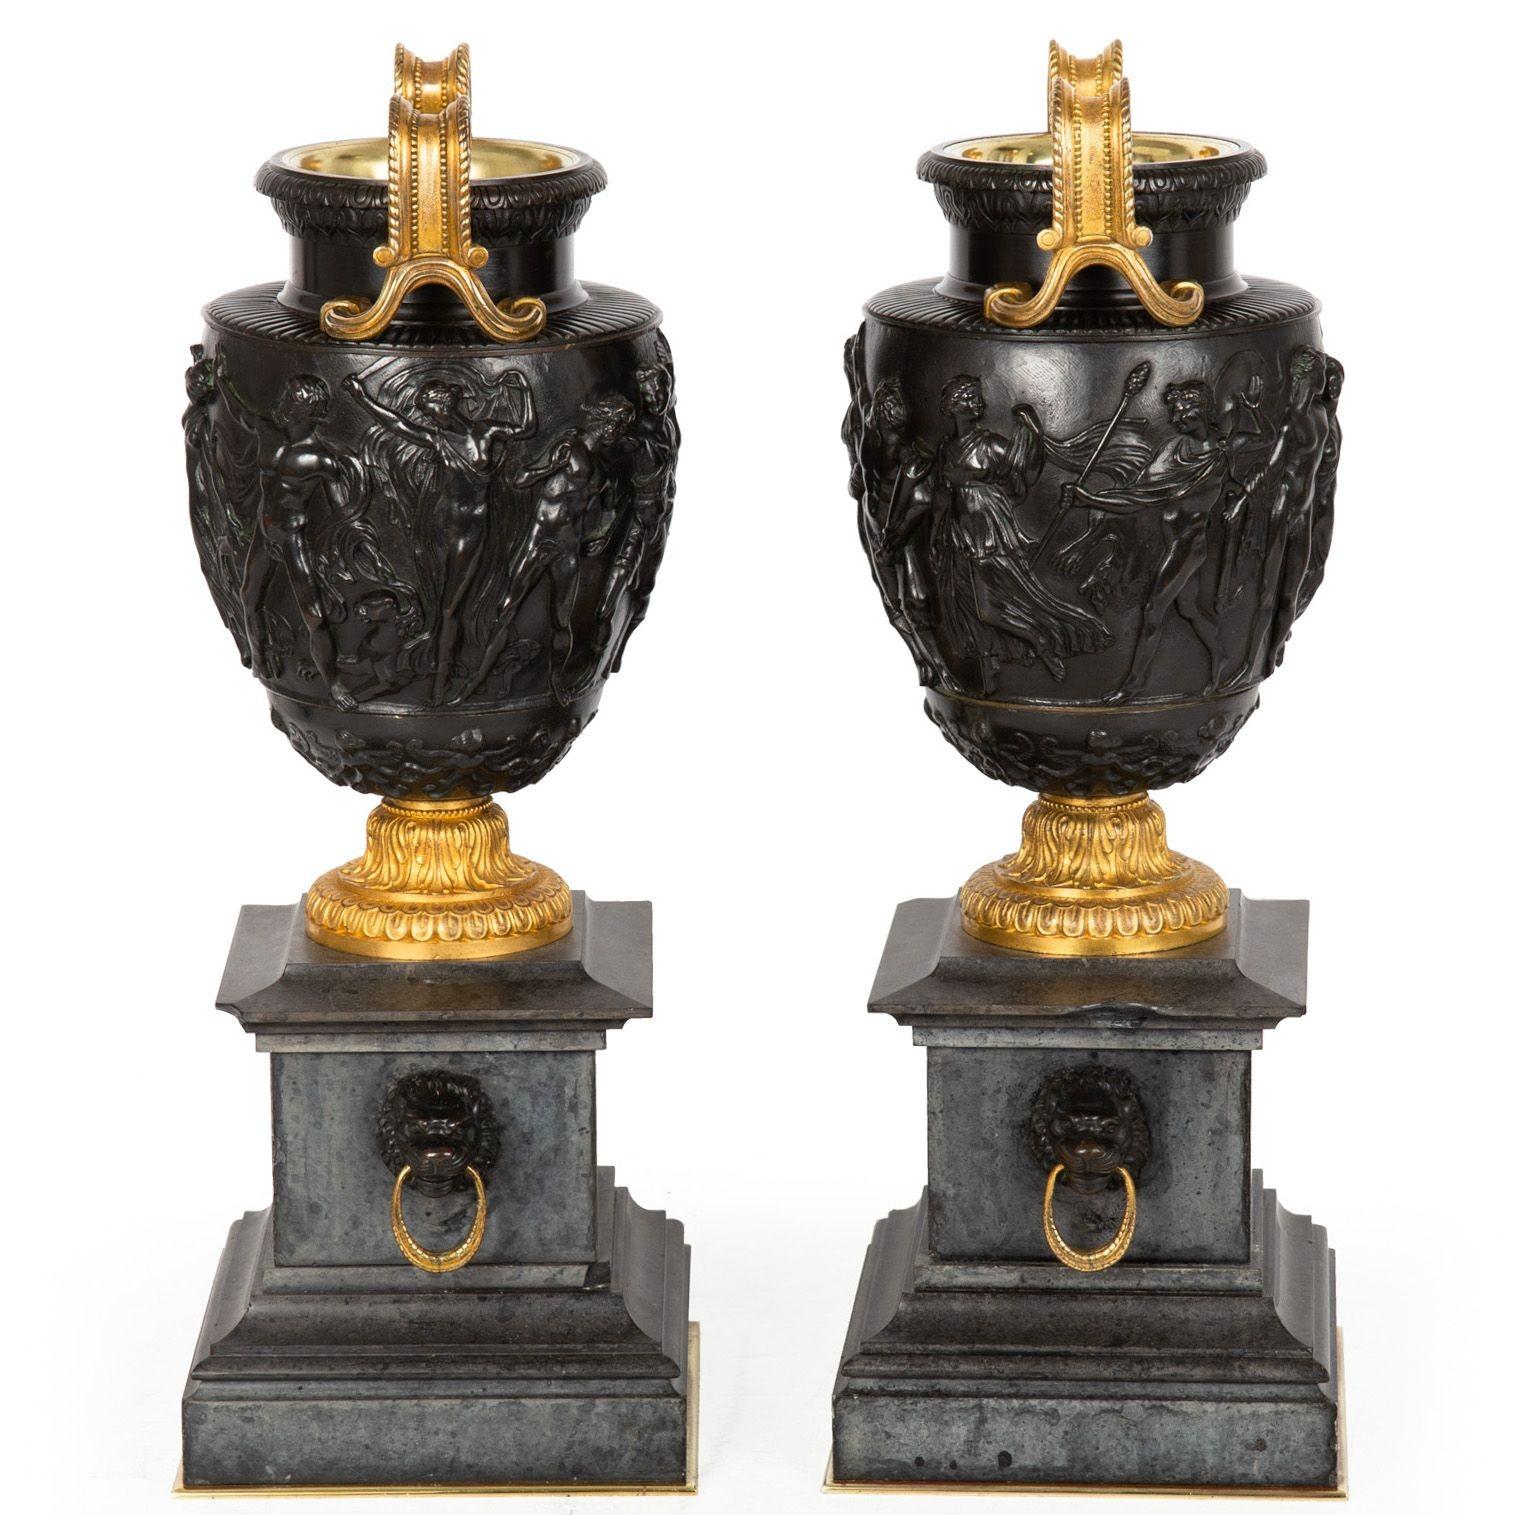 European Grand Tour Antique Patinated Bronze “Townley” Vases Urns circa 1870, a Pair